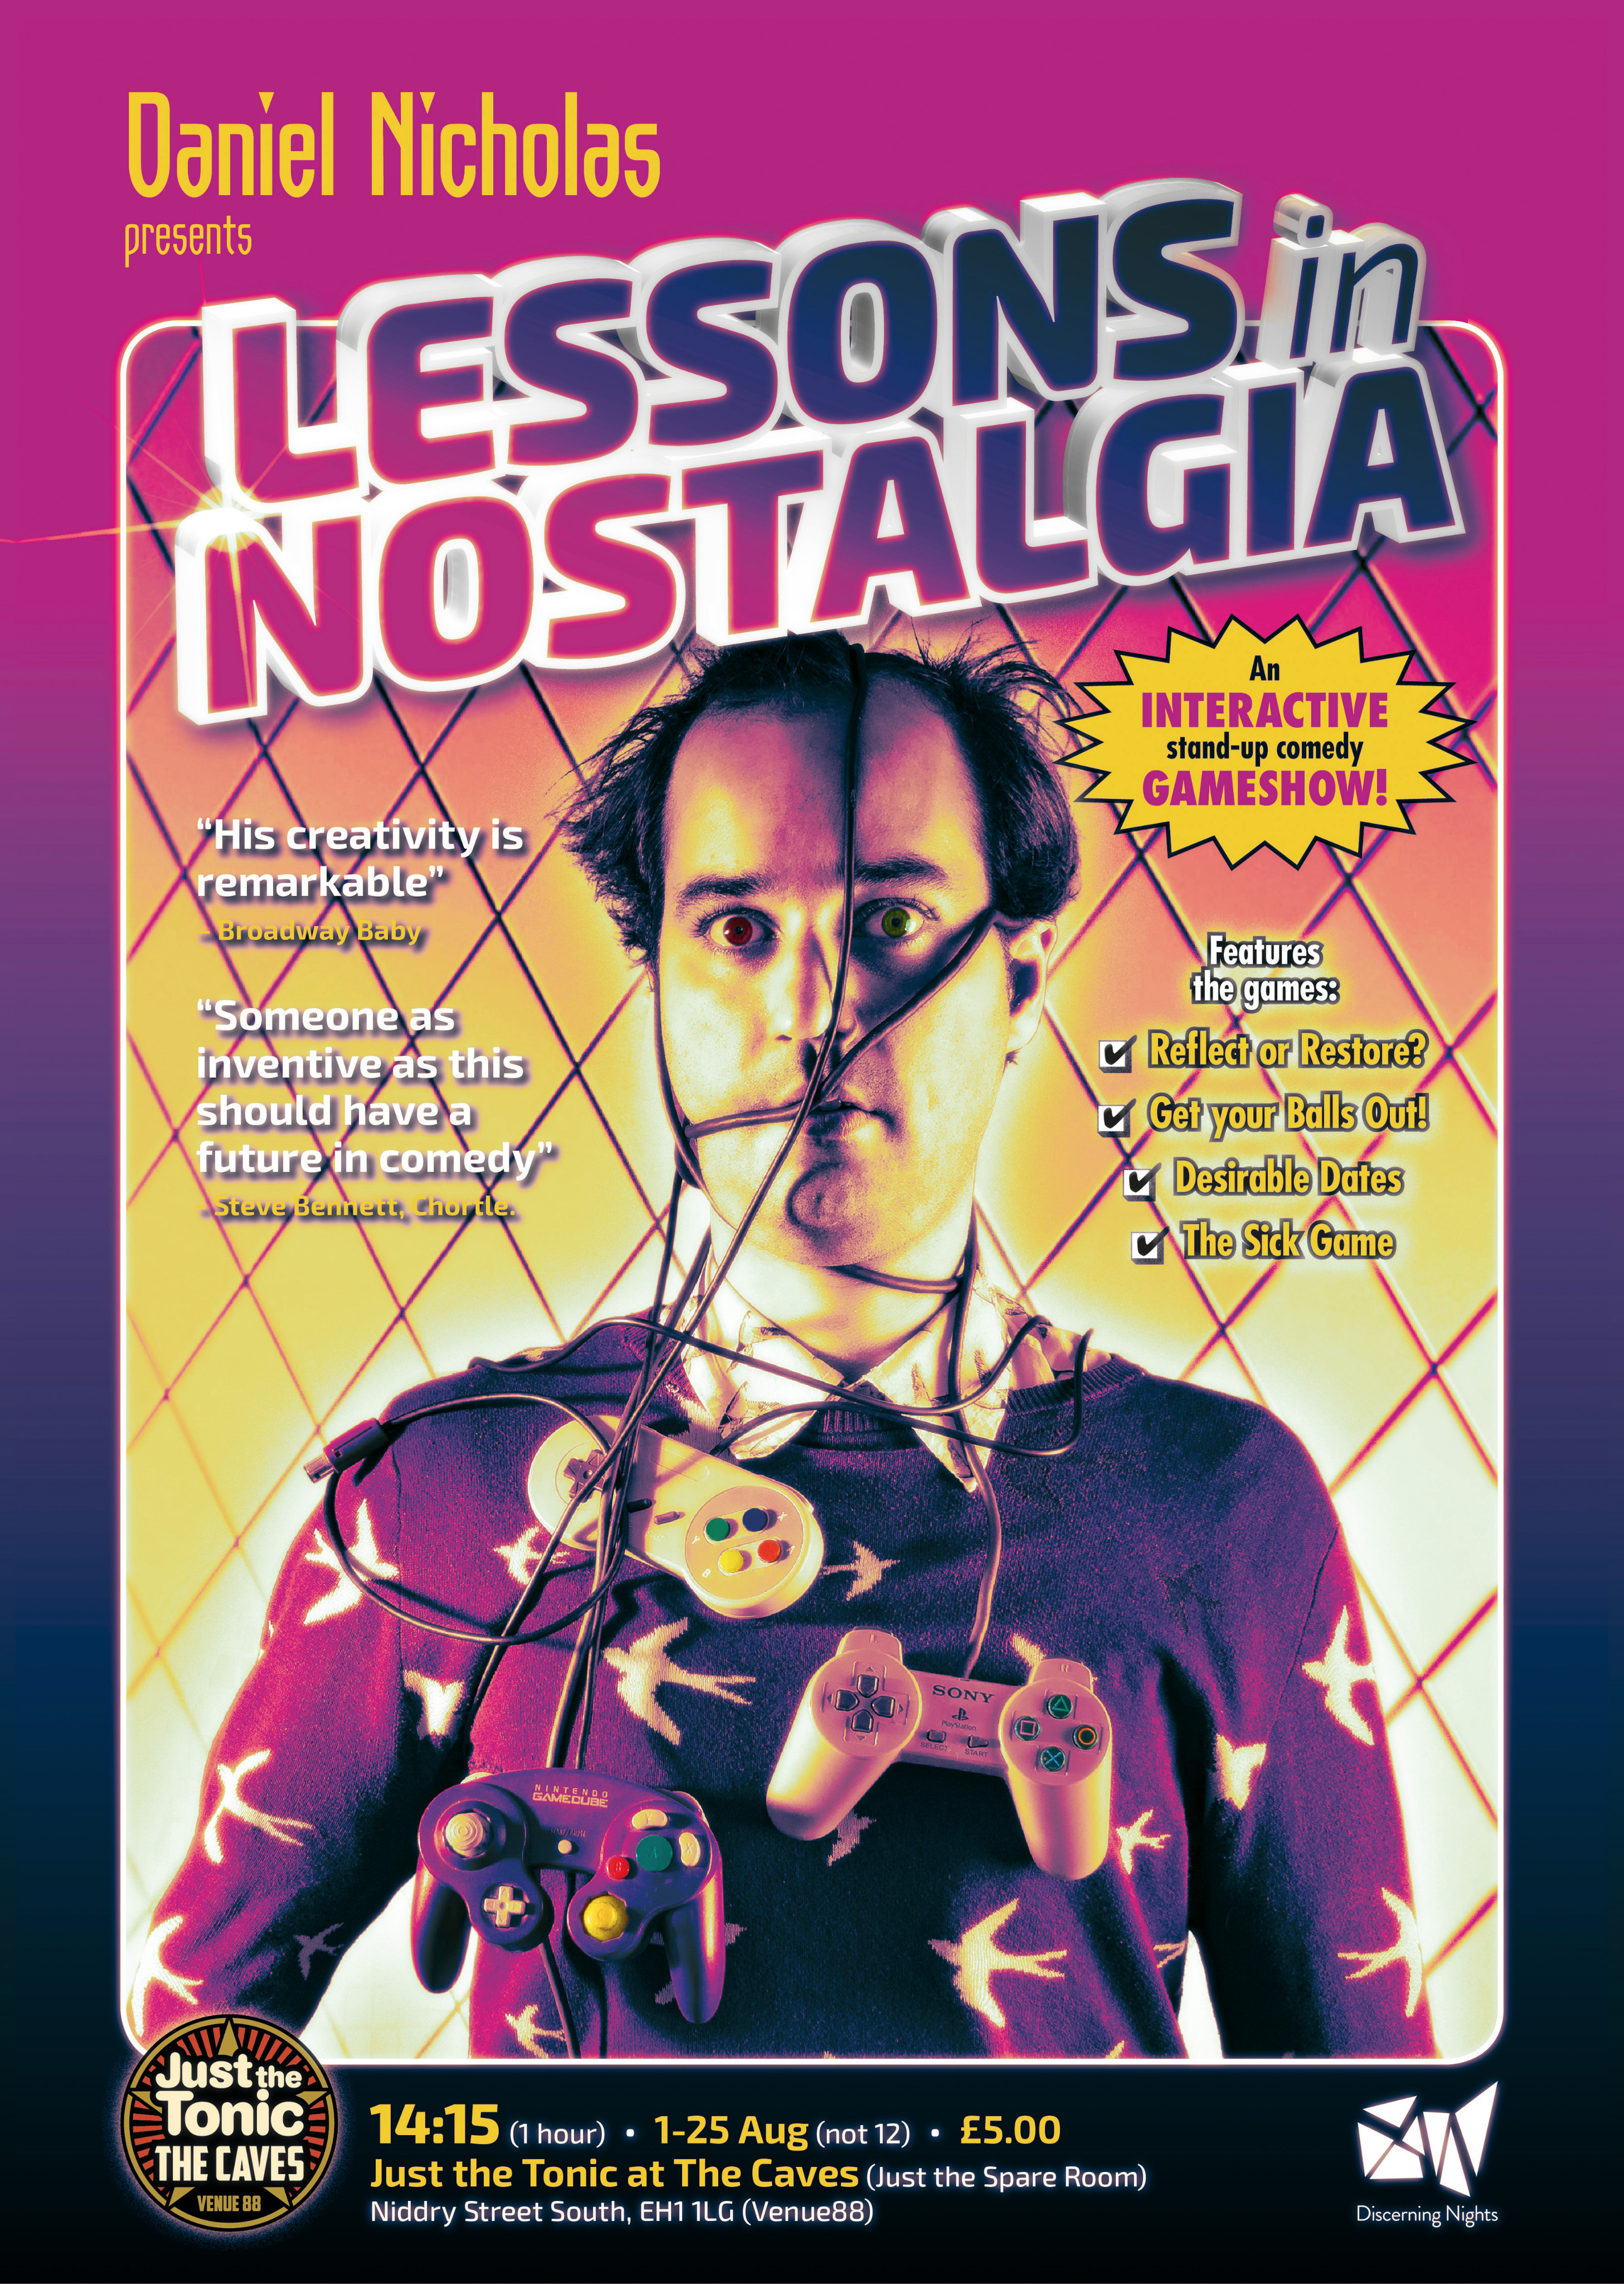 The poster for Daniel Nicholas: Lessons in Nostalgia